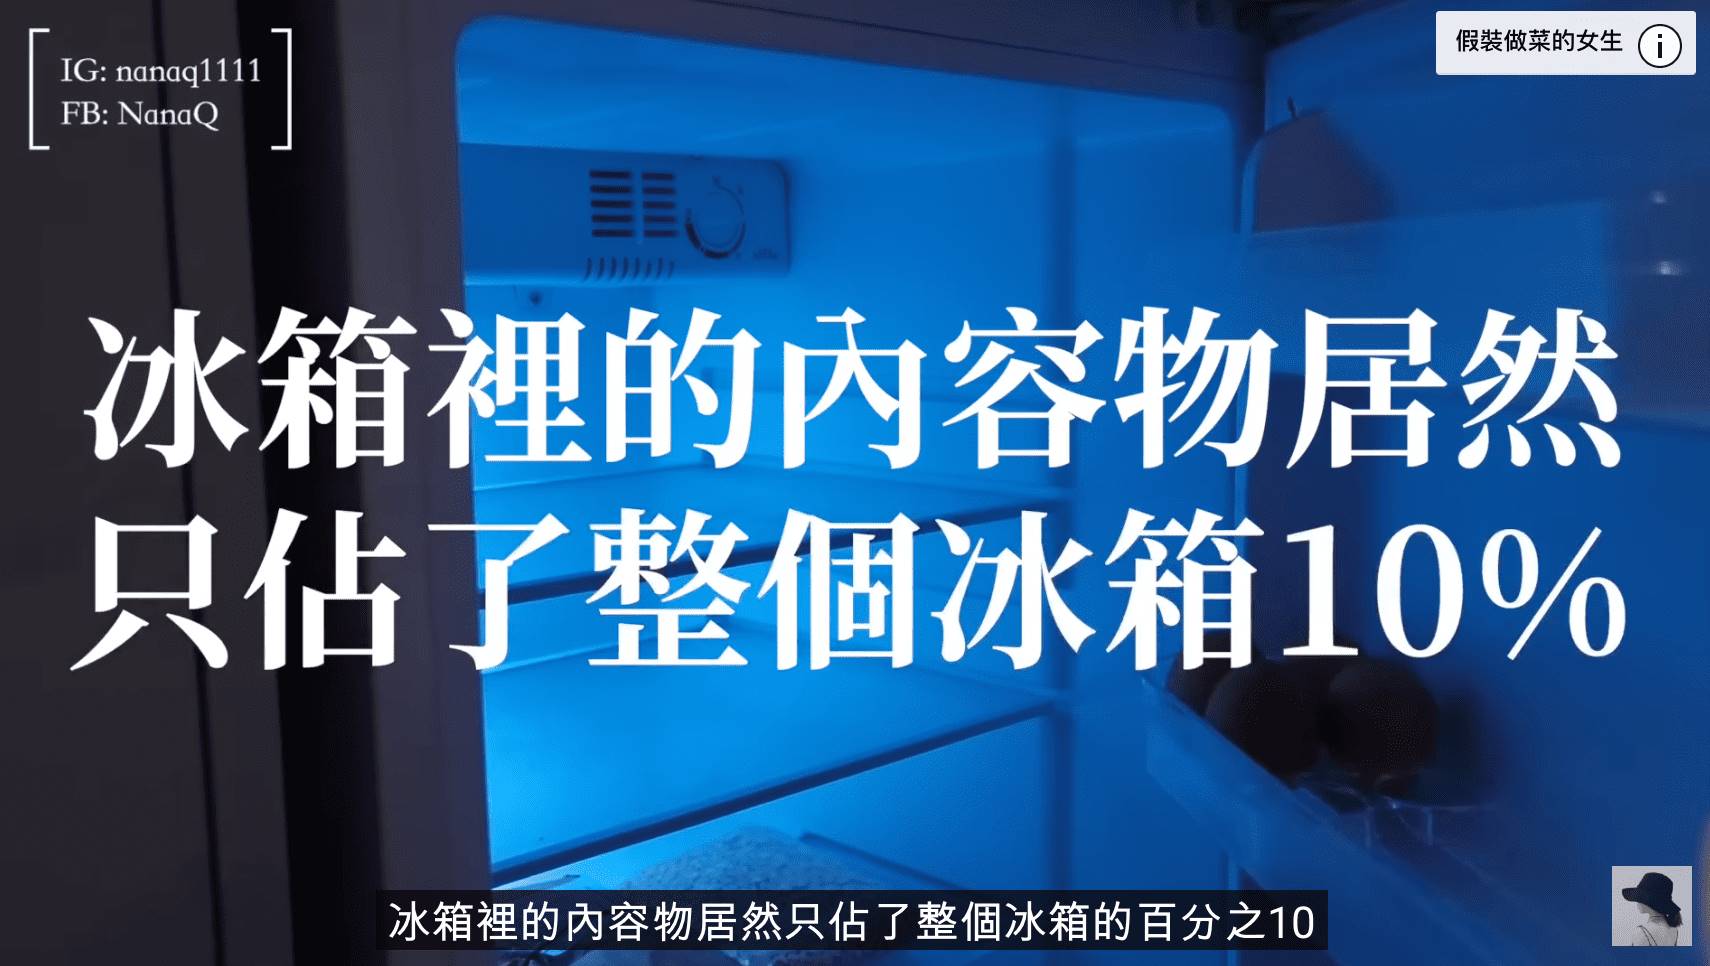 NanaQ透露自己丟掉冰箱，想嘗試體驗沒有冰箱的生活。